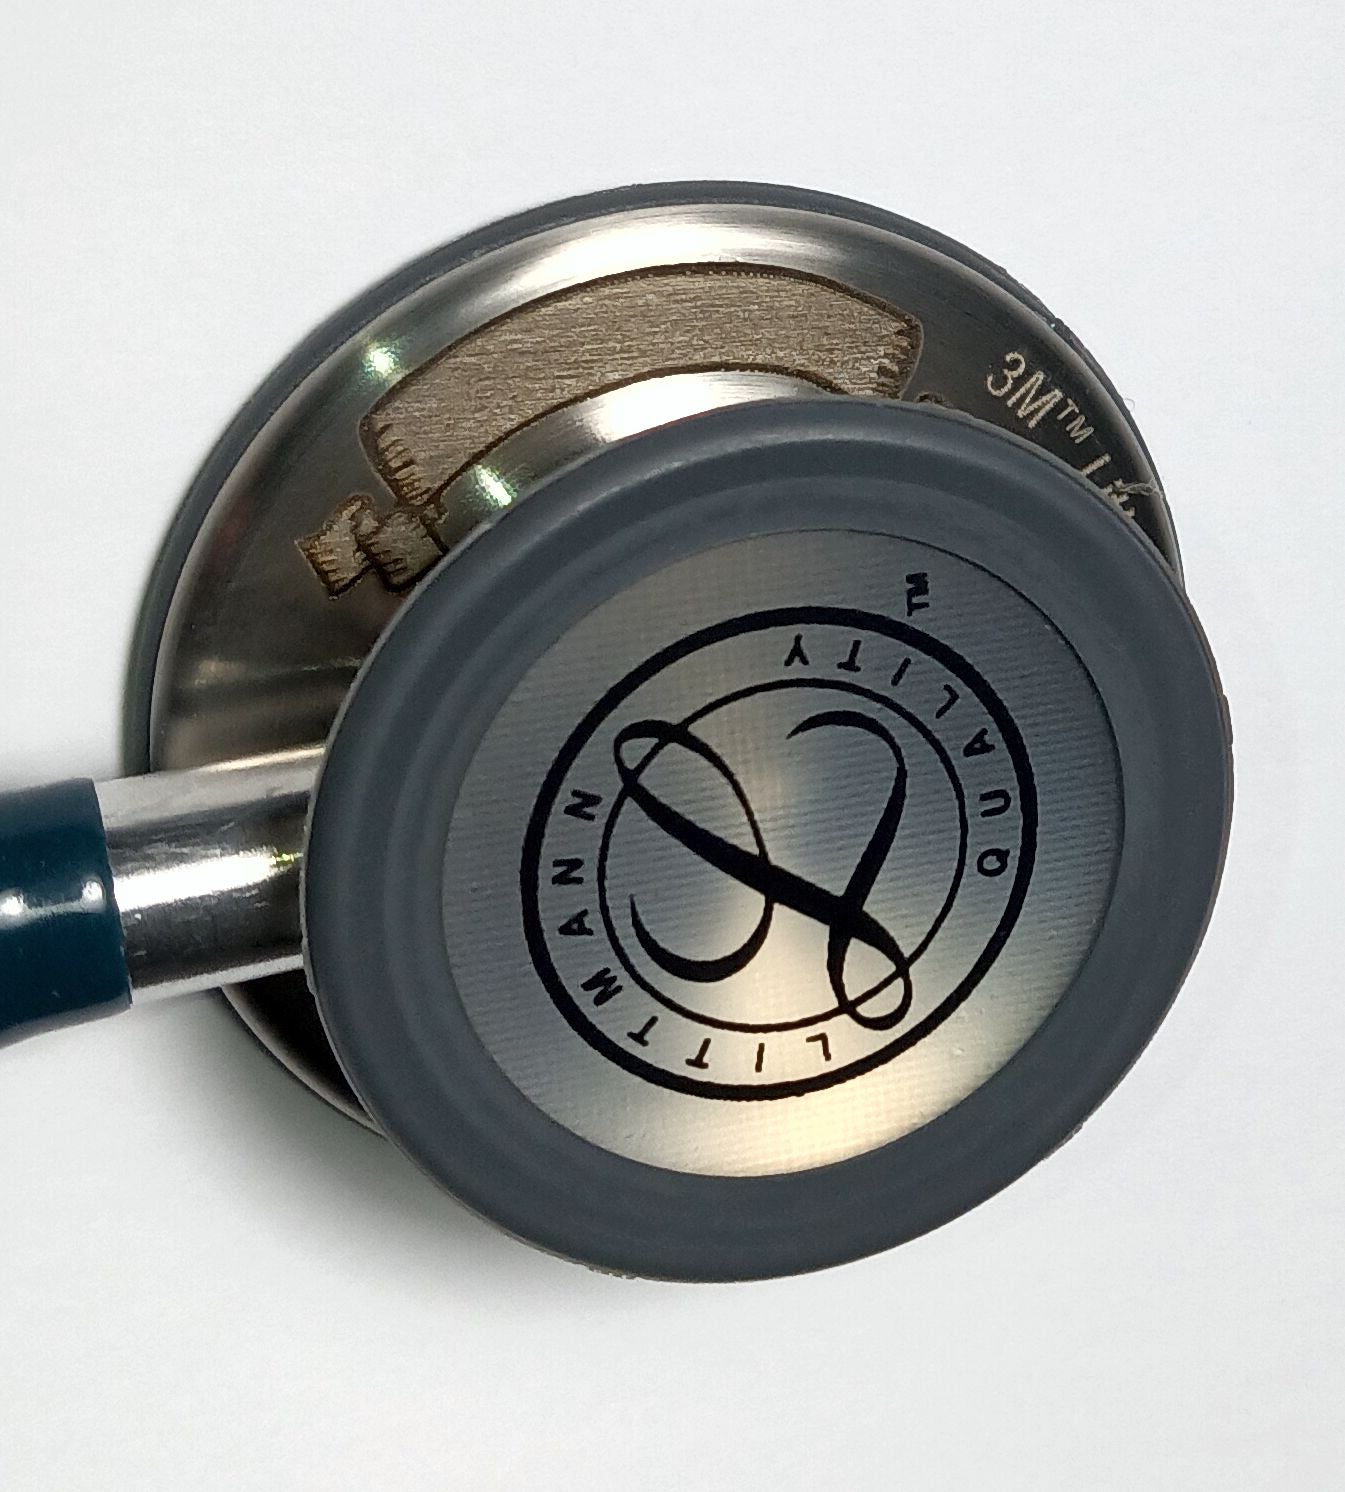 Littmann Cardiology IV Diagnostic Stethoscope: Navy Blue 6154 - Over engraved 3M Littmann Stethoscopes 3M Littmann   